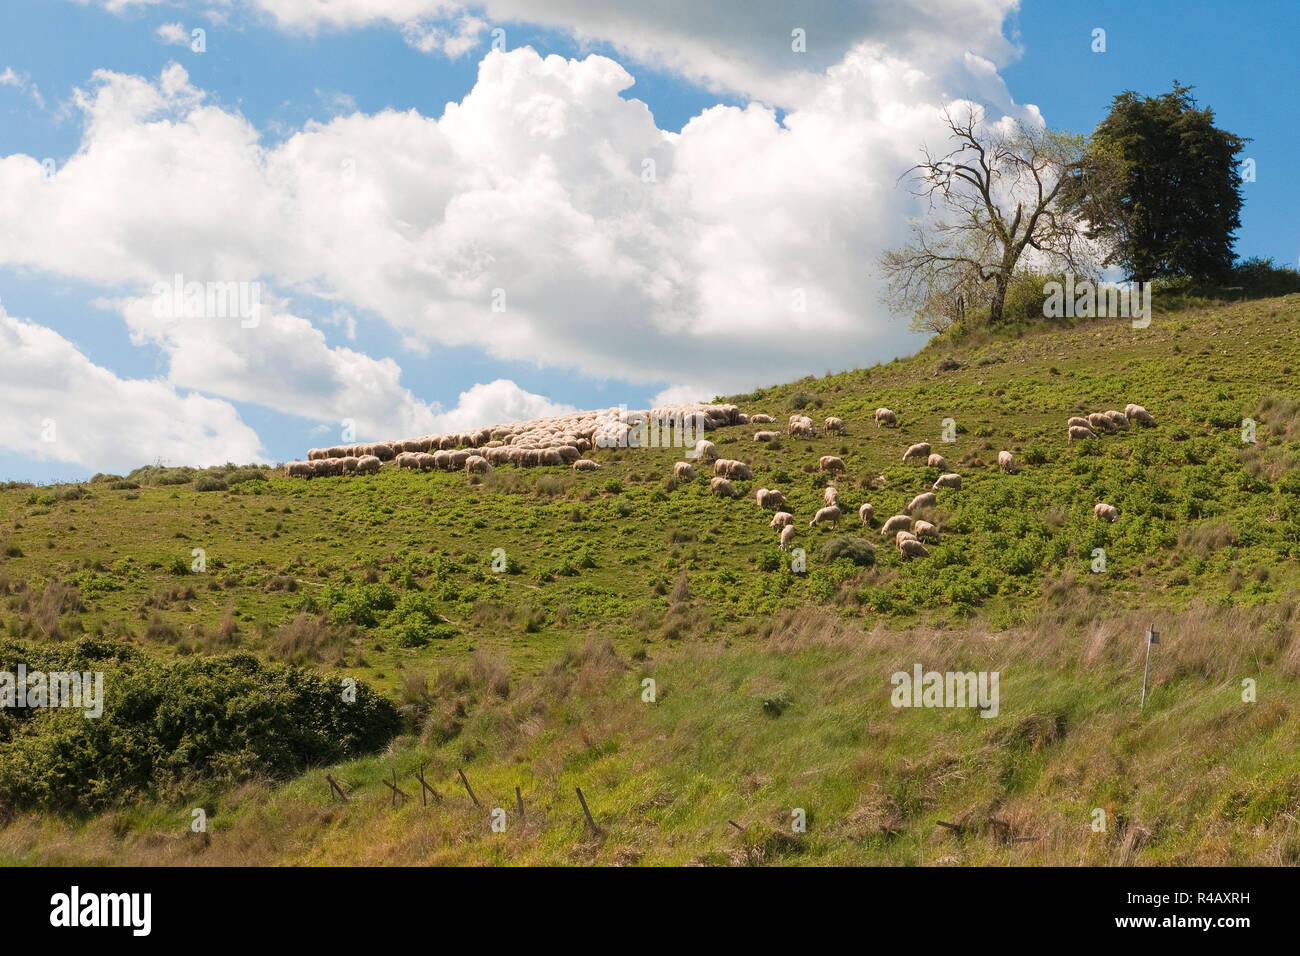 flock of sheep, Tuscany, Italy, Europe Stock Photo